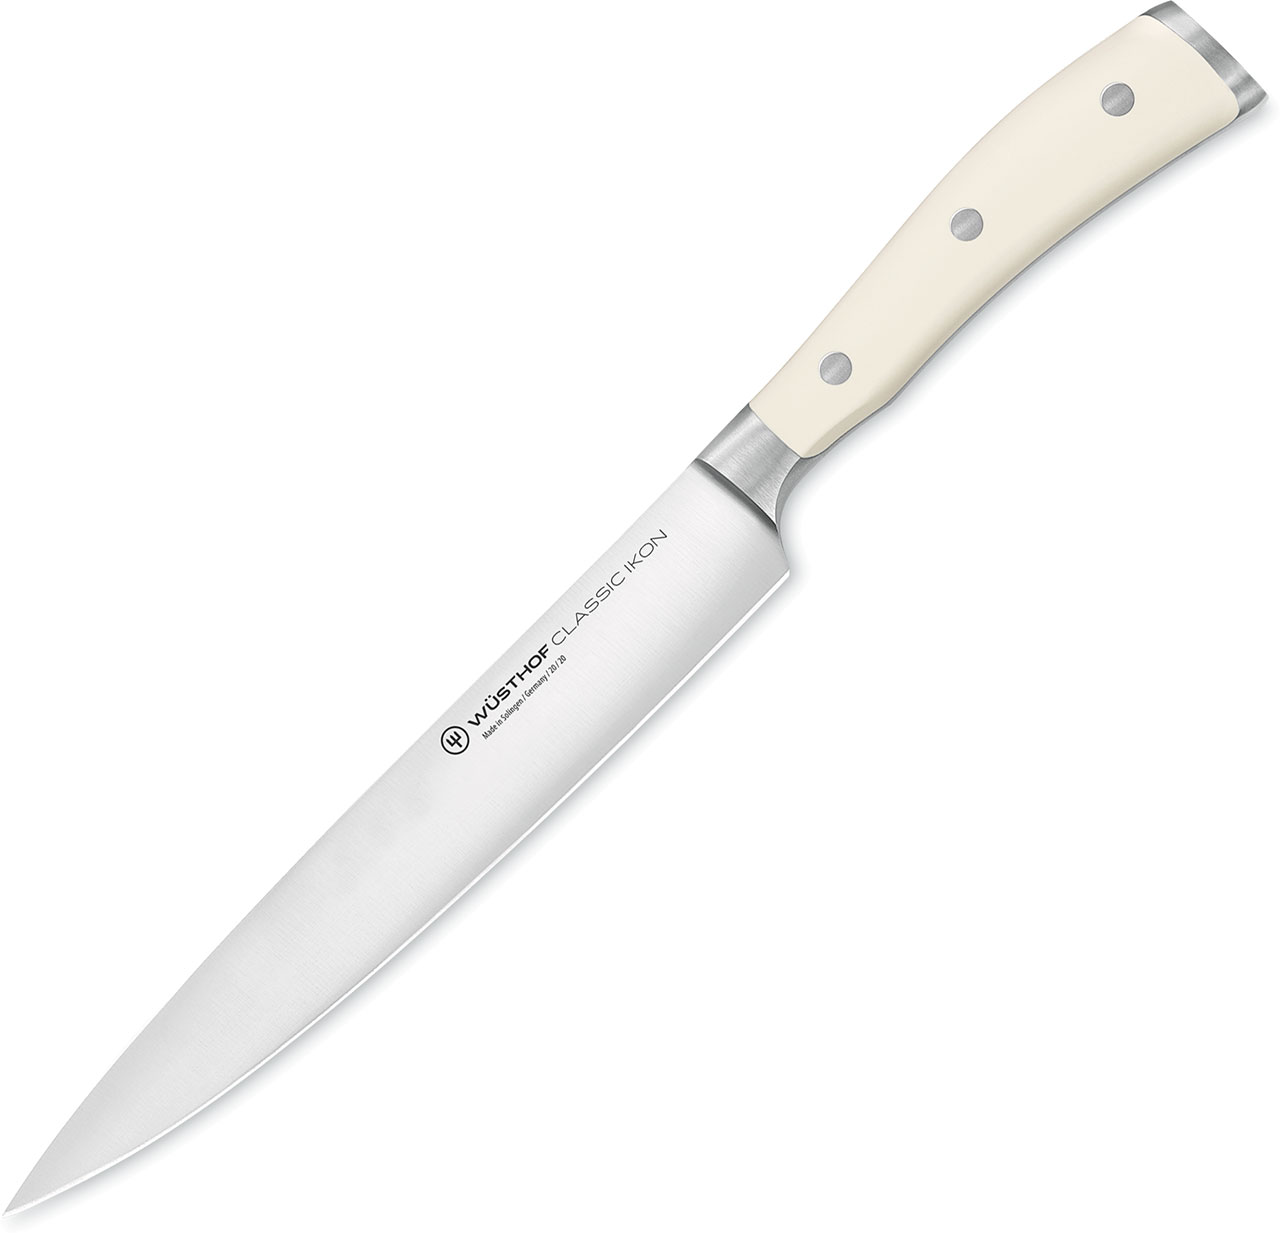 Wüsthof Classic Ikon Crème Carving Knife 20cm